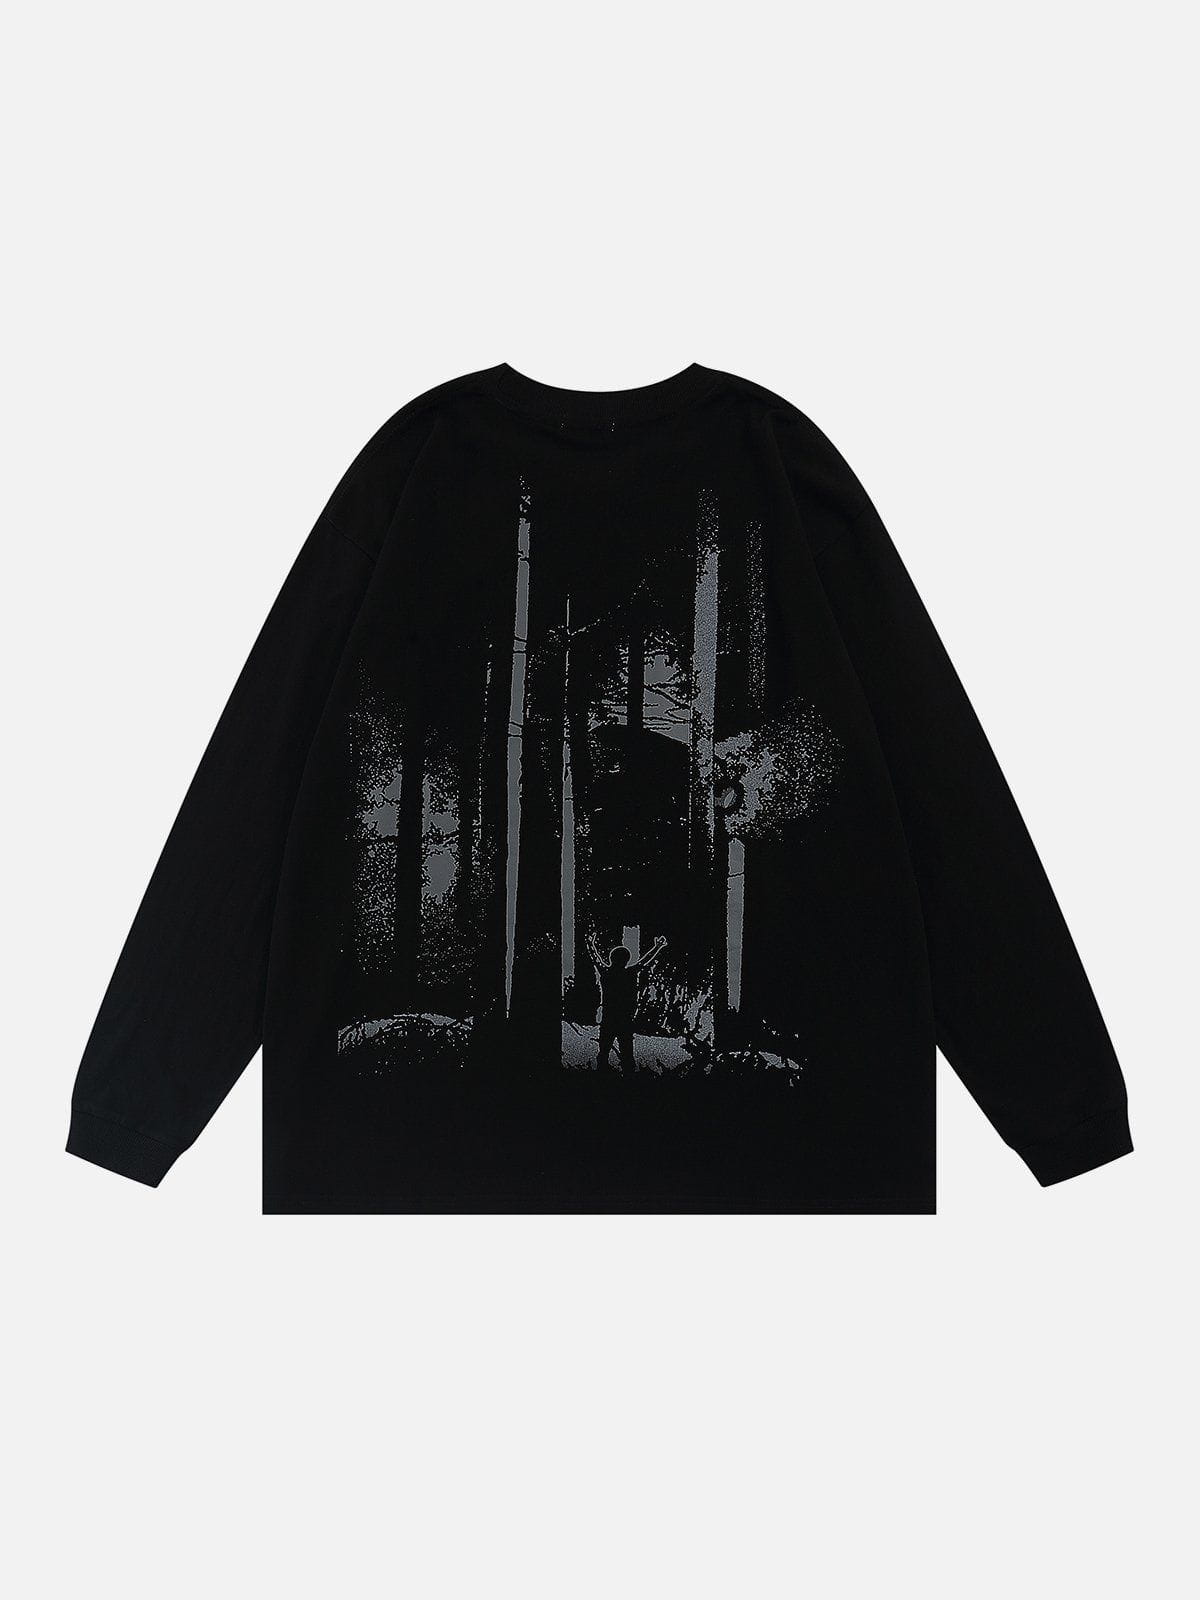 LUXENFY™ - “SLUXENFY™ -RCOW” Print Vintage Sweatshirt luxenfy.com